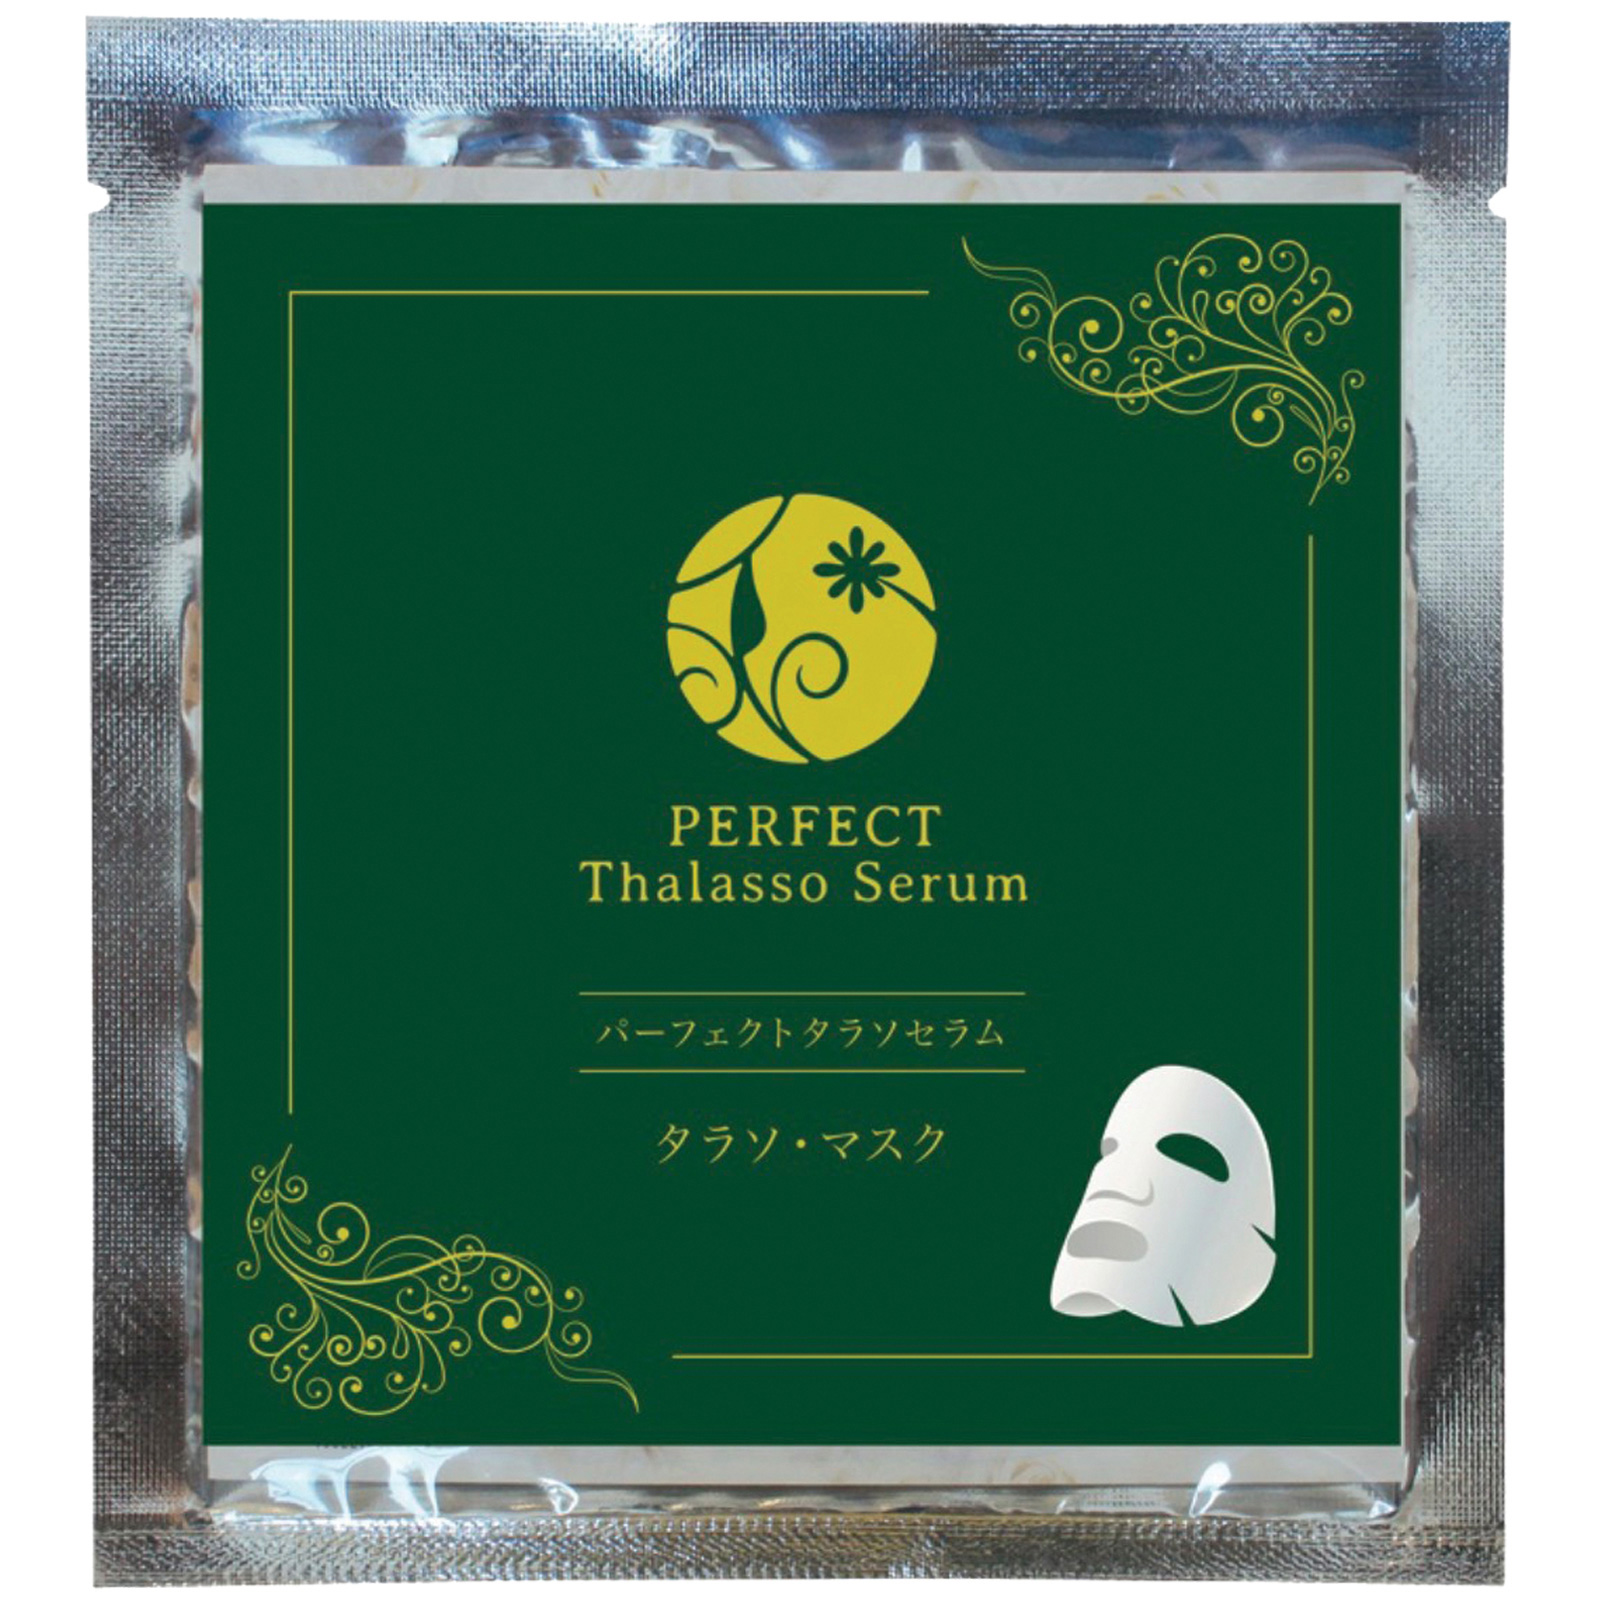 DD Perfect Thalasso Serum Mask. Антивозрастная ультраувлажняющая маска-эссенция для лица ДиДи Перфект Талассо, 1 шт.